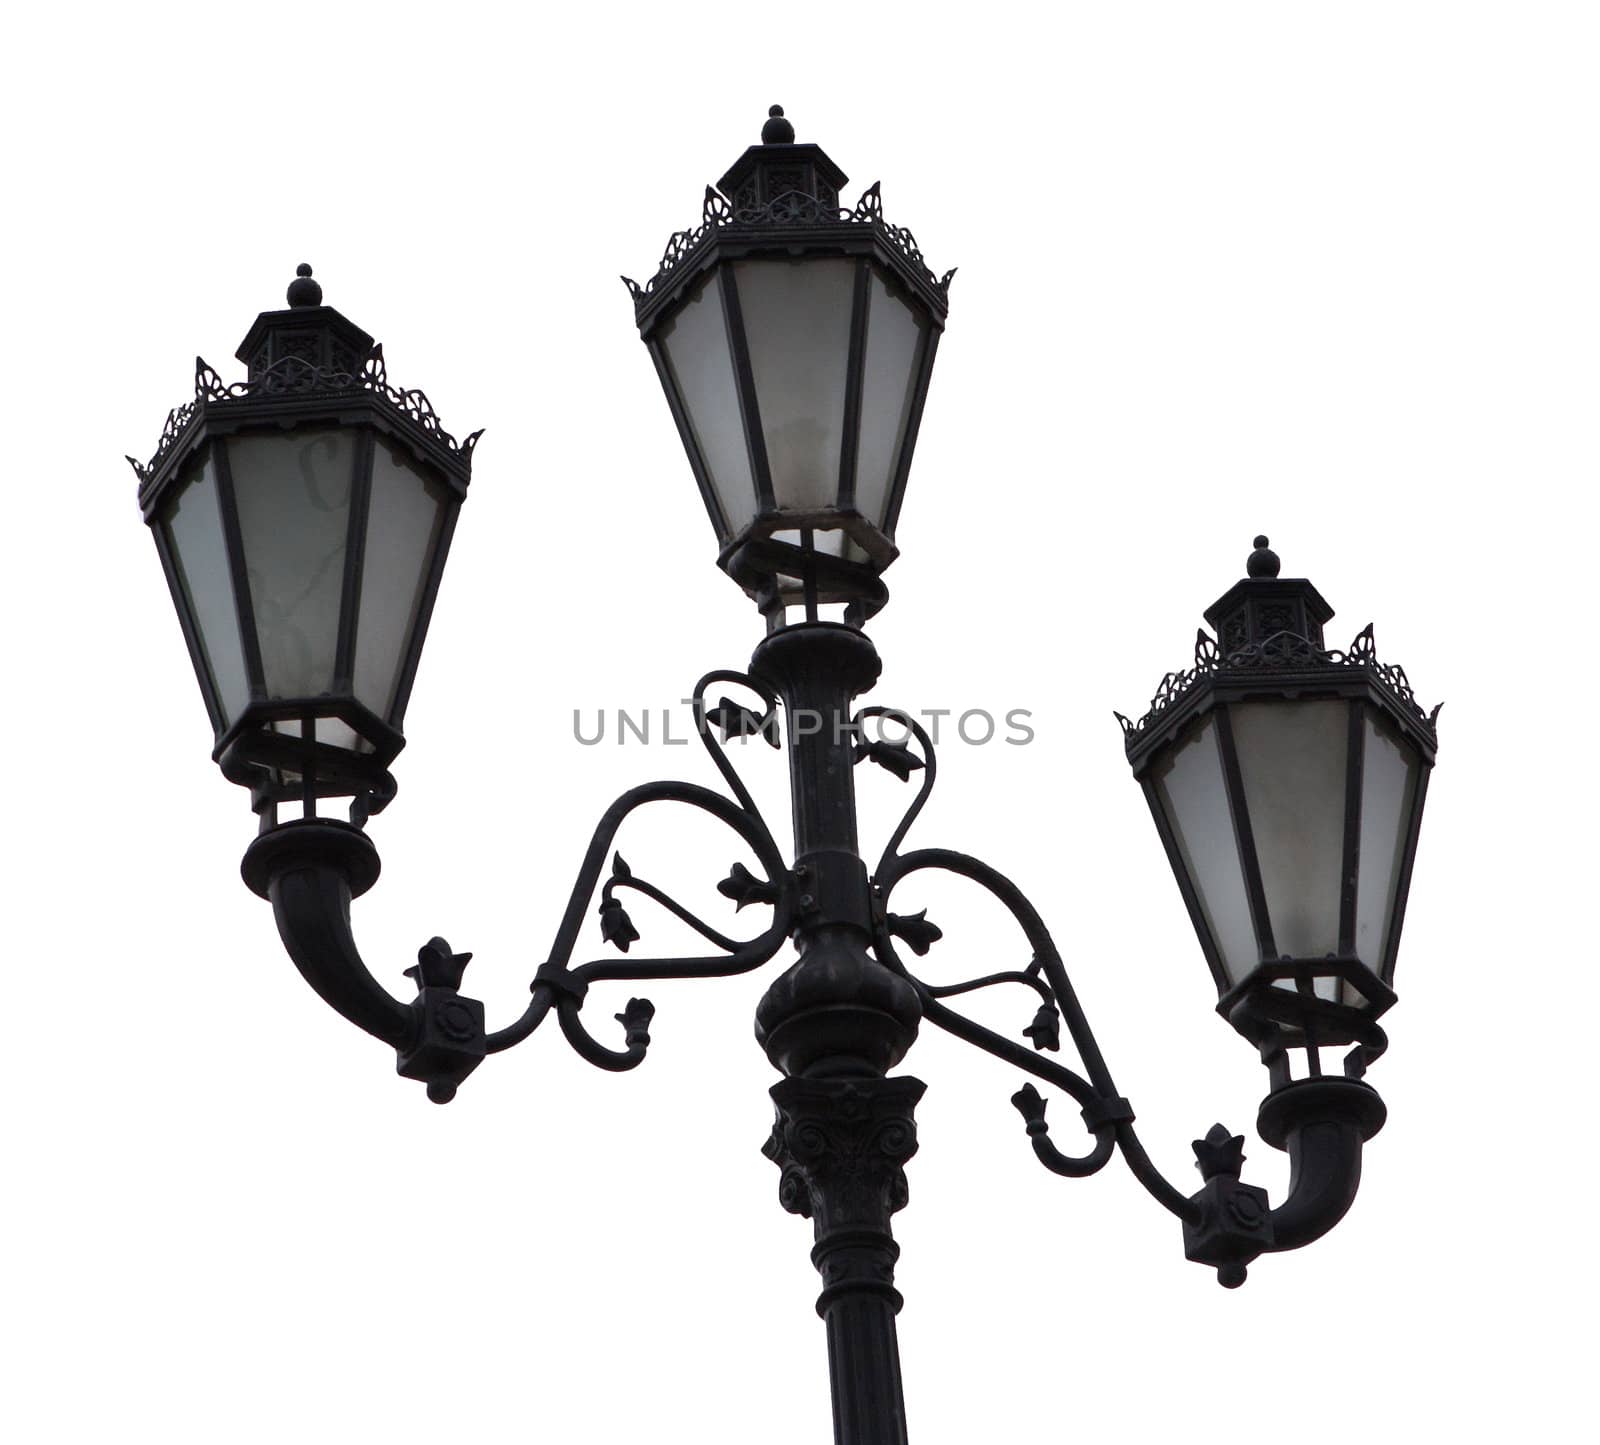 Ornate street lamp by nigerfoxy